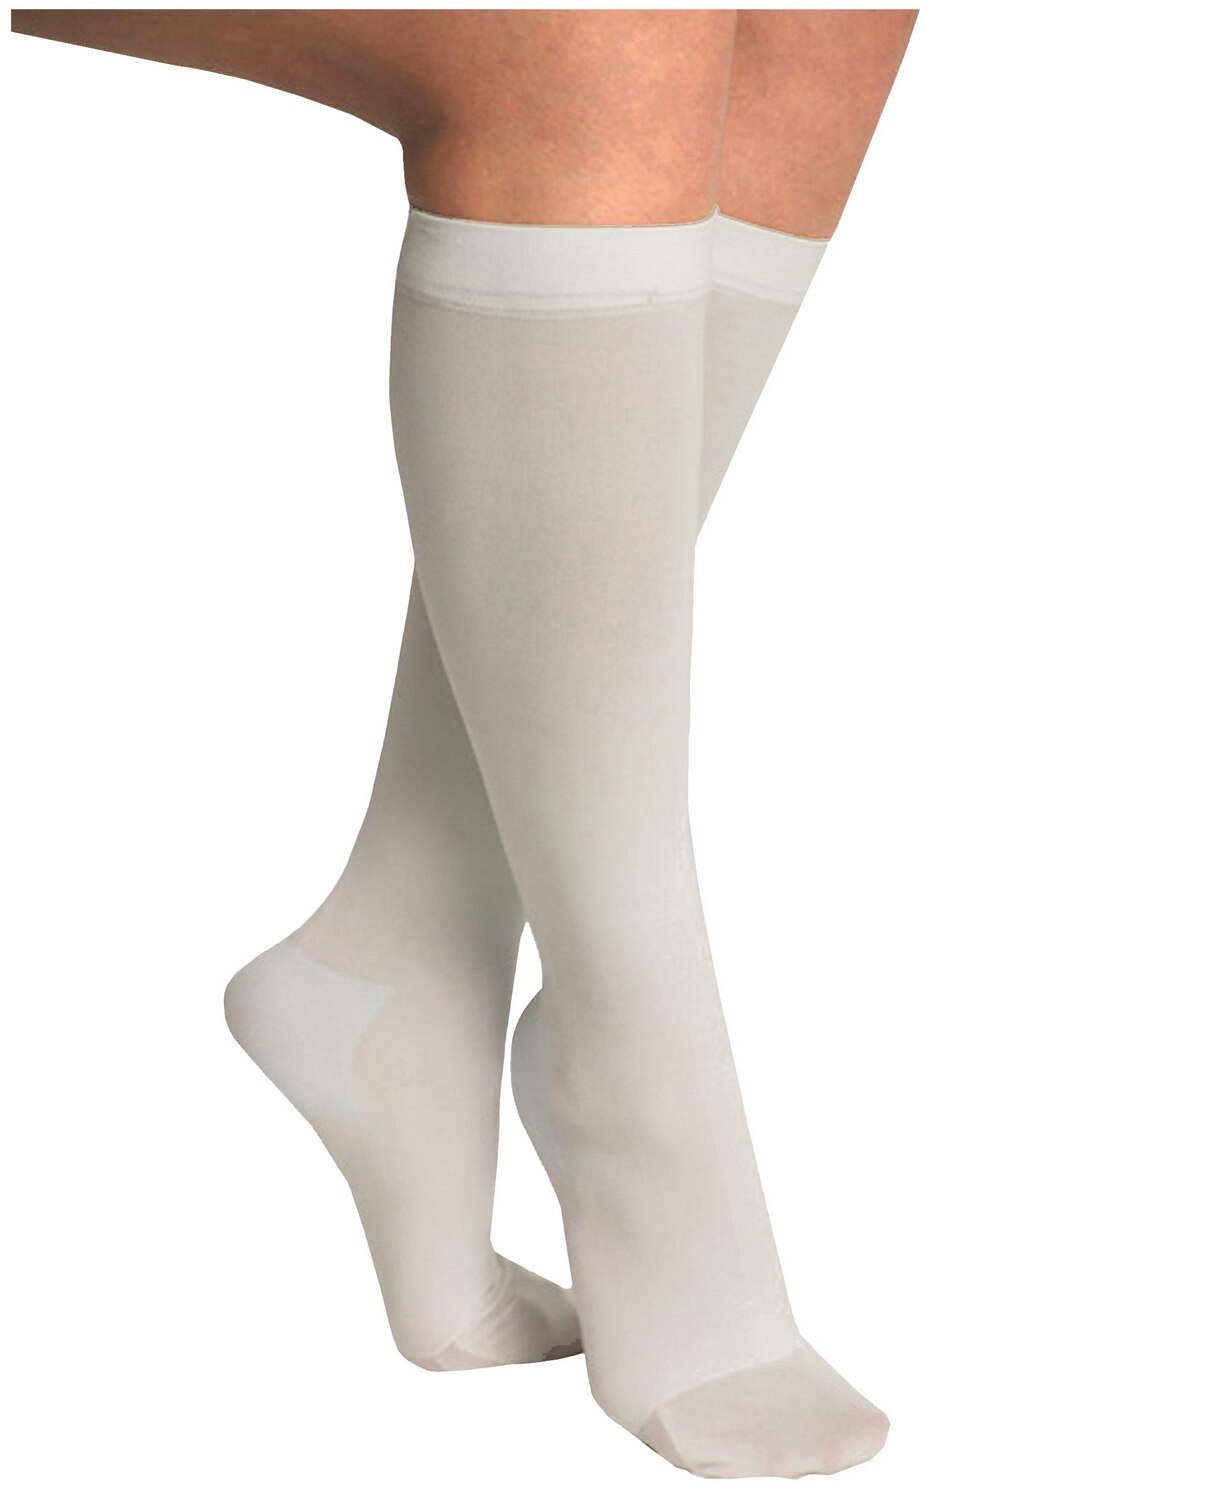 ITA-MED Anti-Embolism Compression Knee High Socks